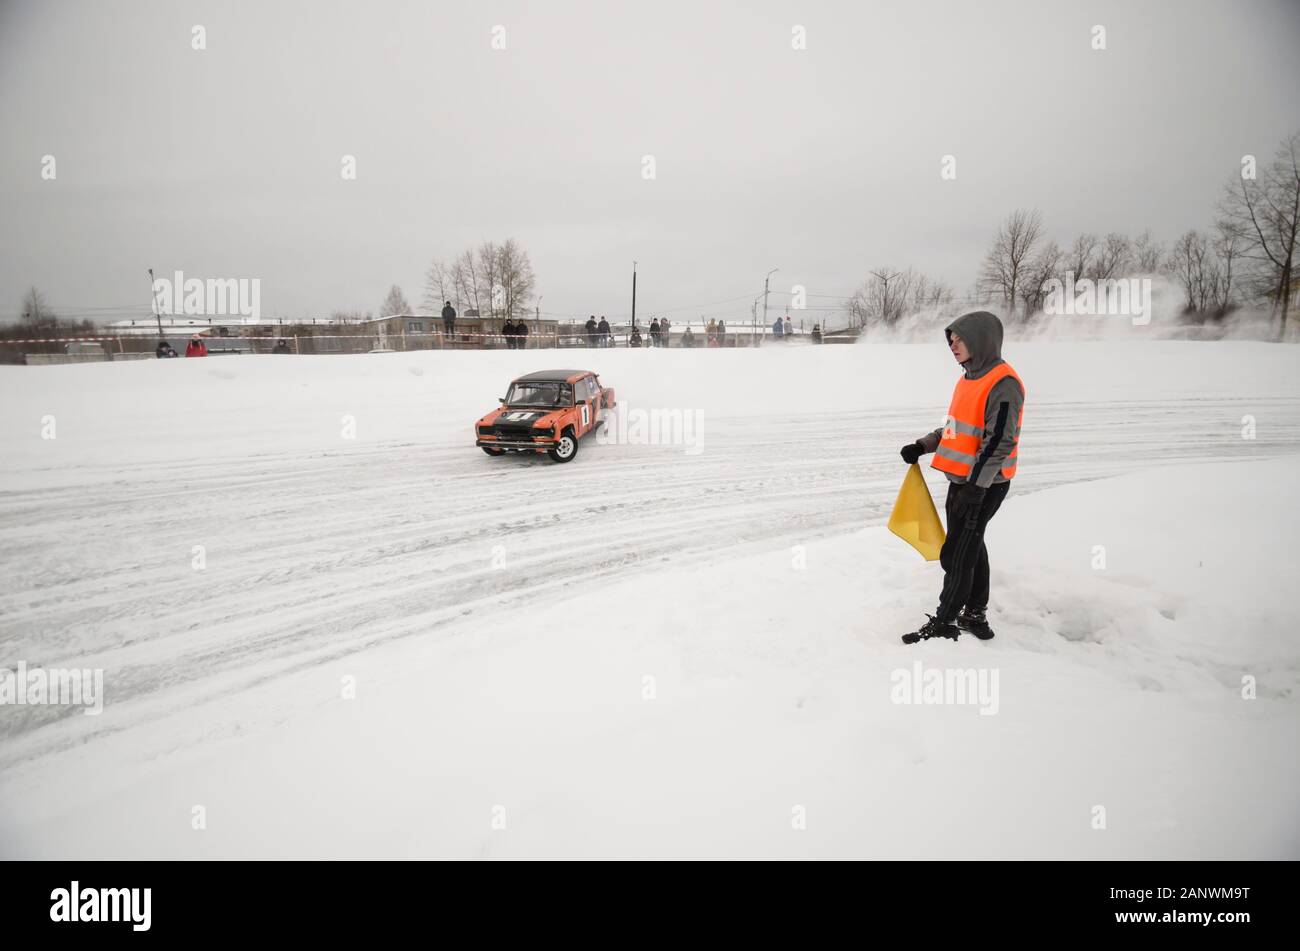 January 2020 - Novodvinsk. Start of the race on the ice track on old Soviet cars. Russia, Arkhangelsk region Stock Photo